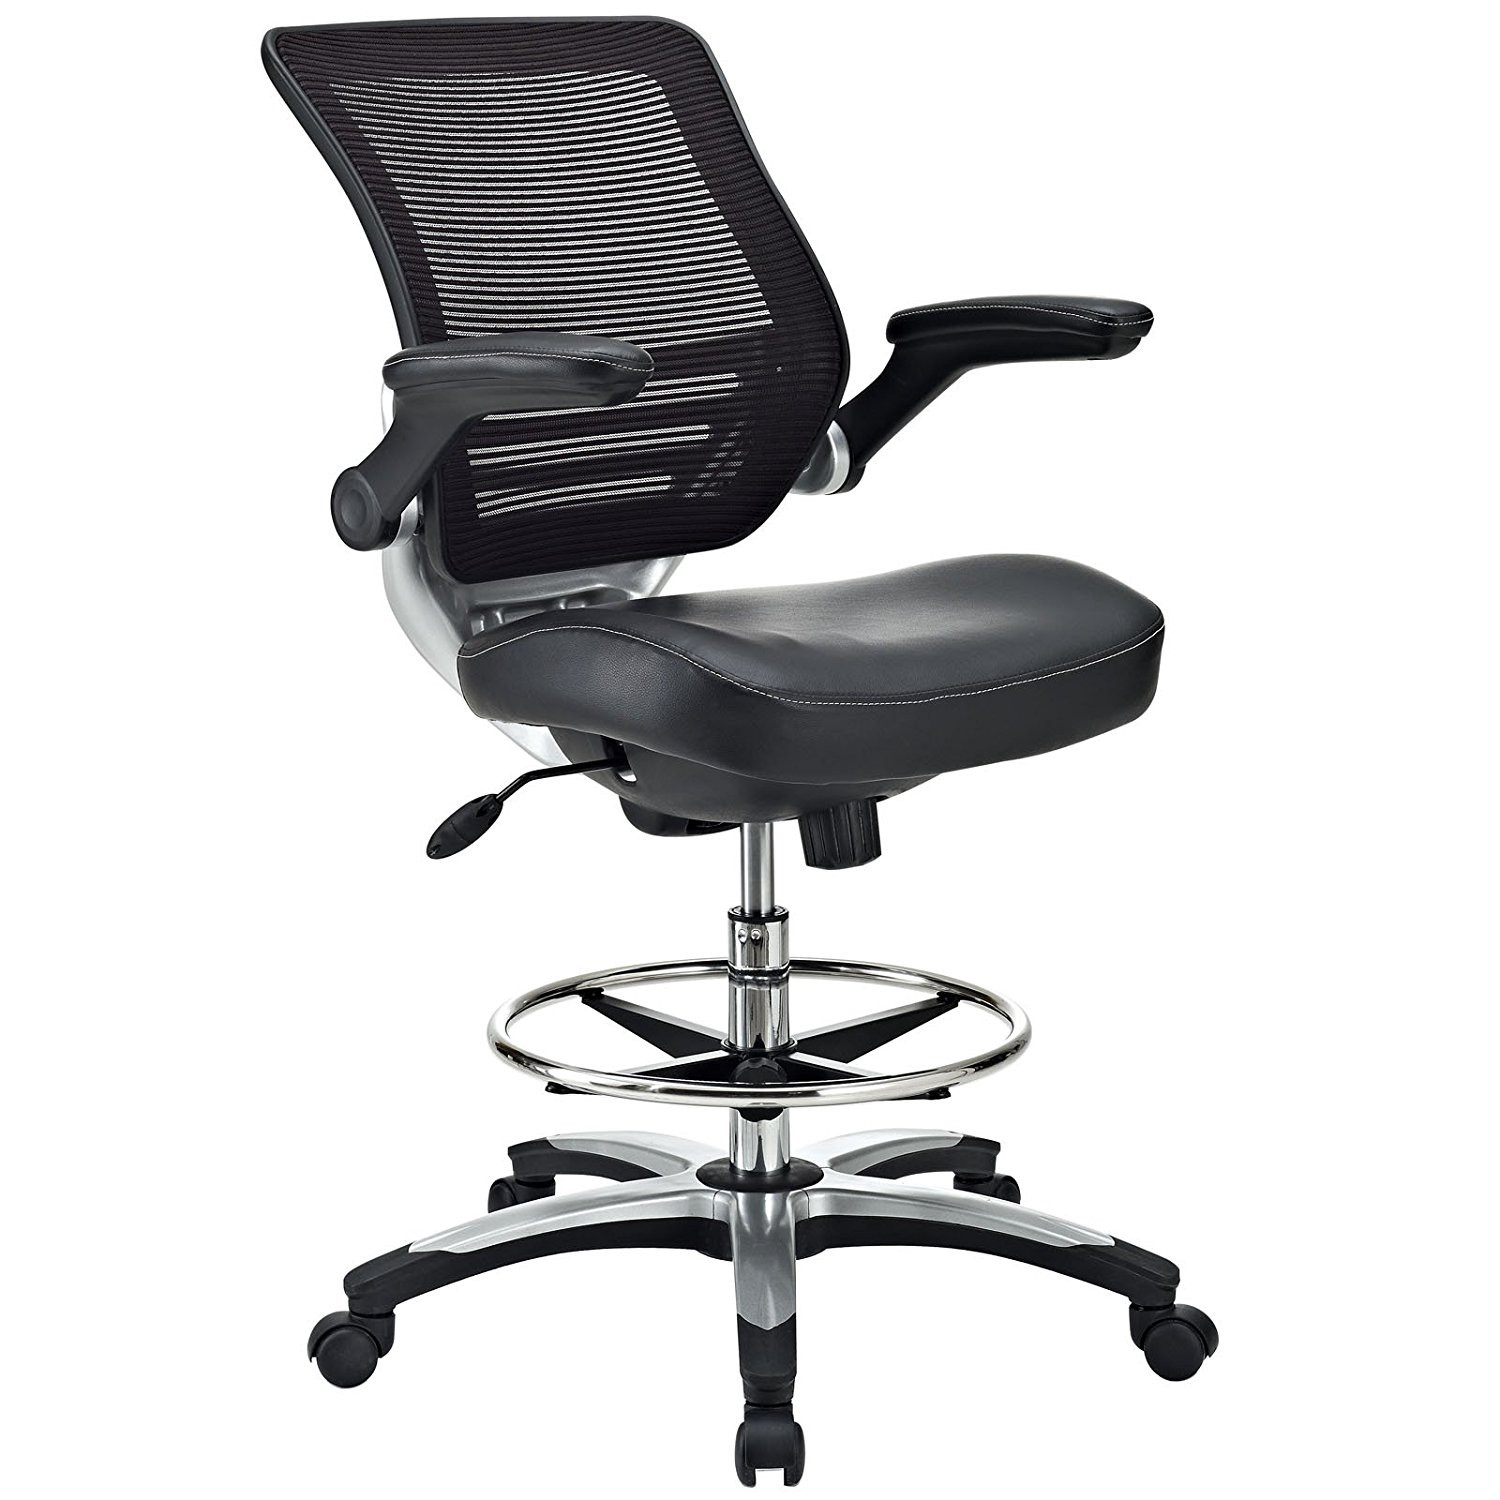 Best ideas about Ergonomic Chair Amazon
. Save or Pin Stool fice Chairs richfielduniversity Now.